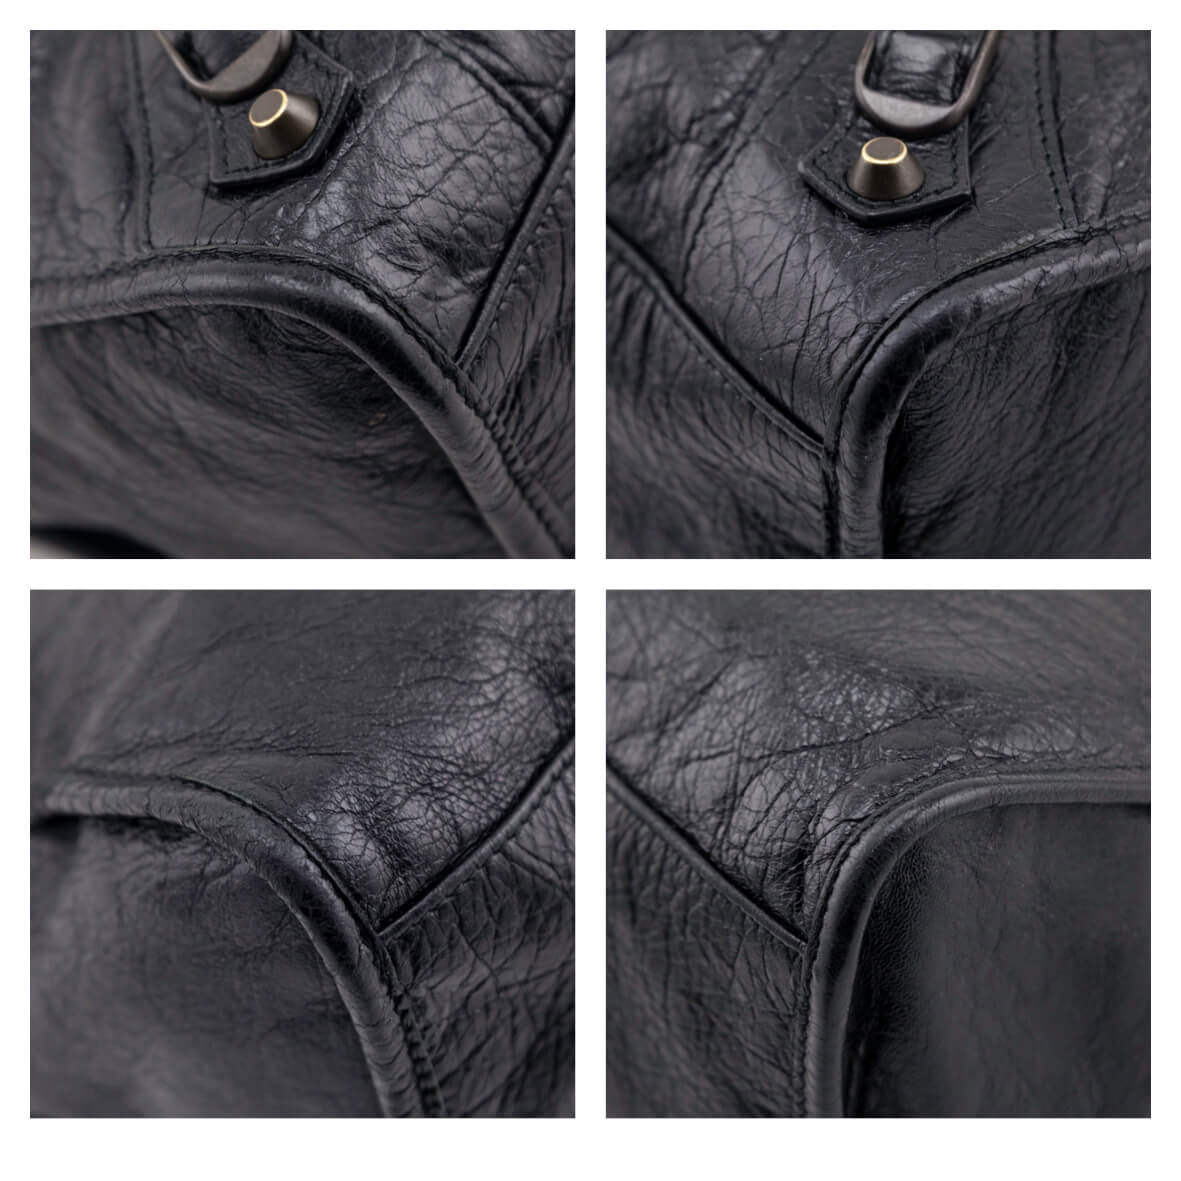 Túi Balenciaga Le Cagole Small Shoulder Bag đen best quality